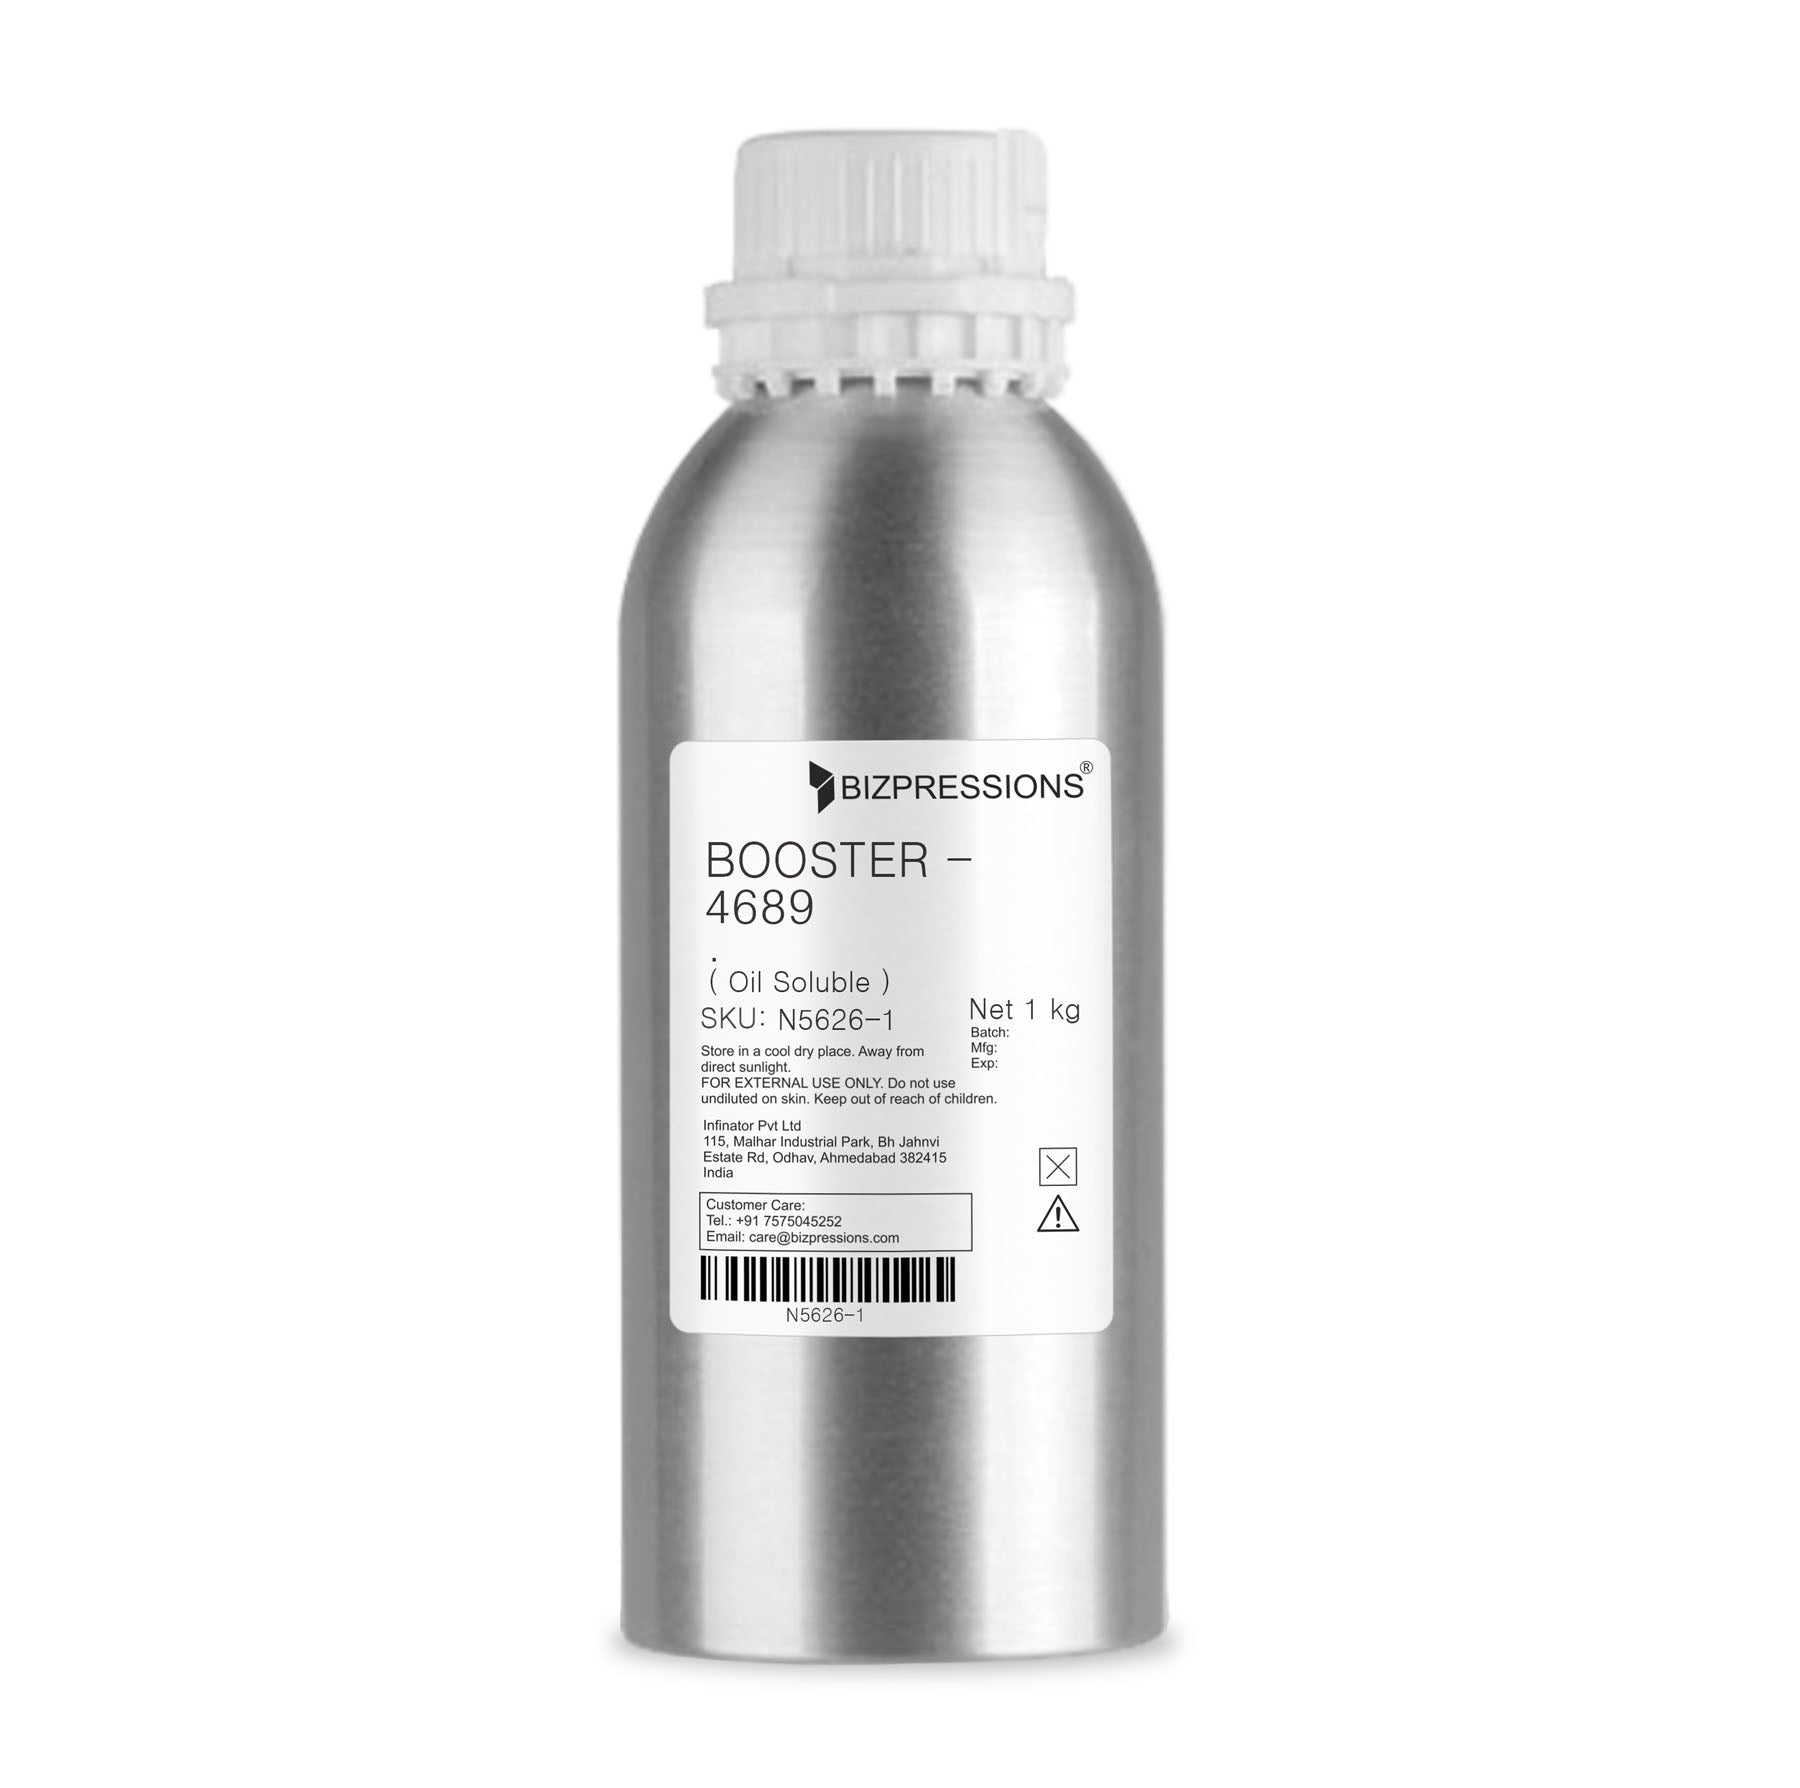 BOOSTER - 4689 - Fragrance ( Oil Soluble ) - 1 kg